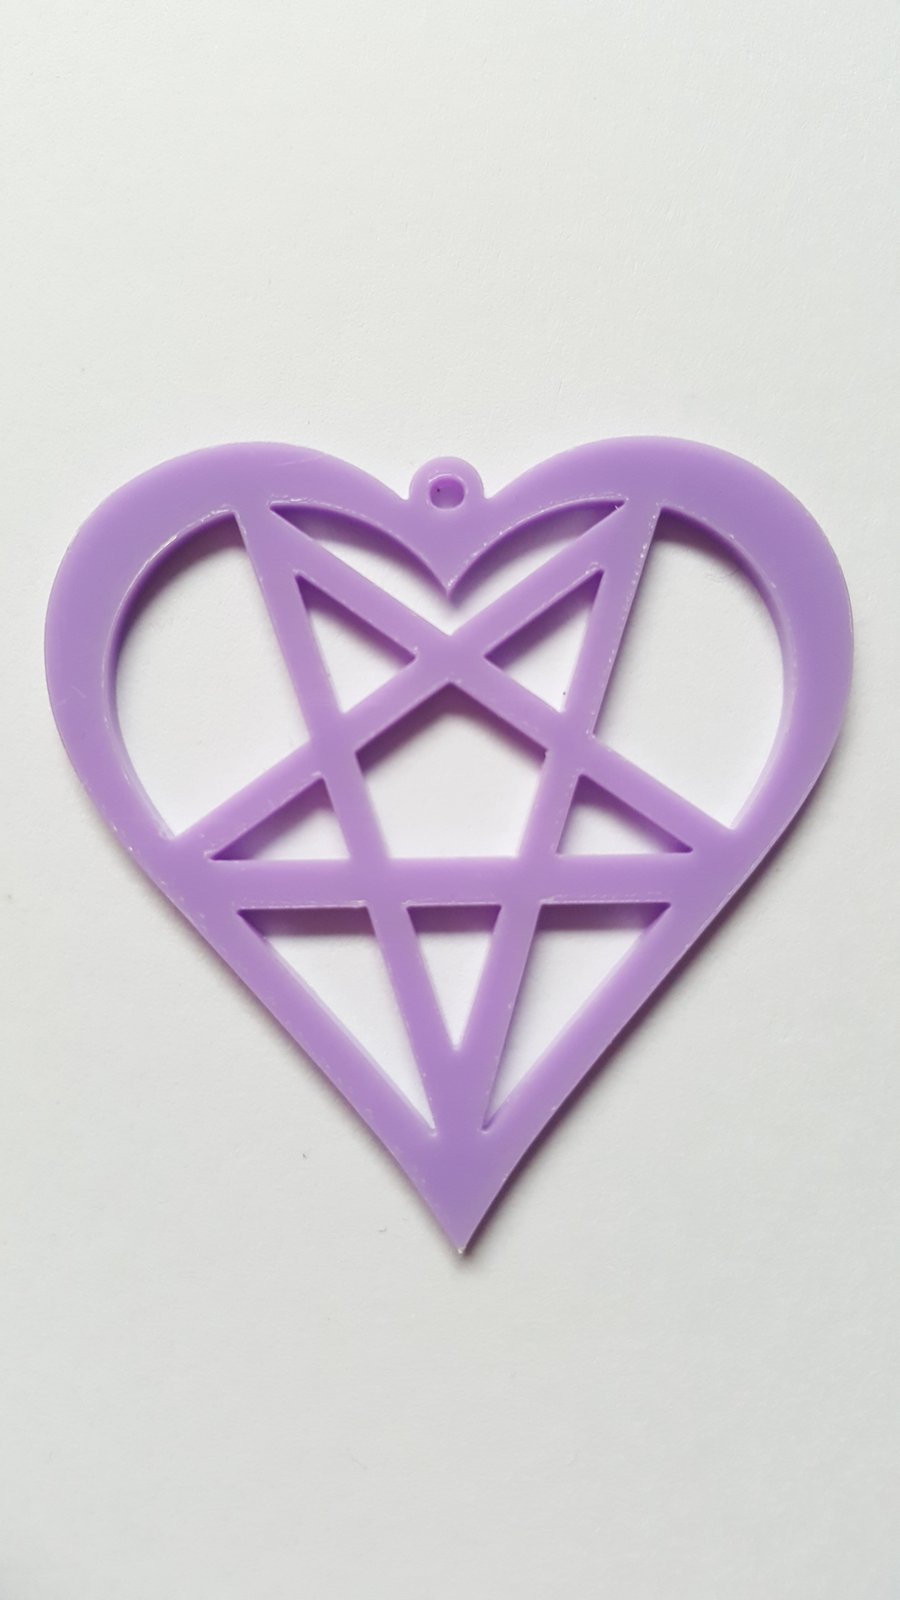 1 x Laser Cut Acrylic Pendant - 50mm - Penta-heart - Lilac 